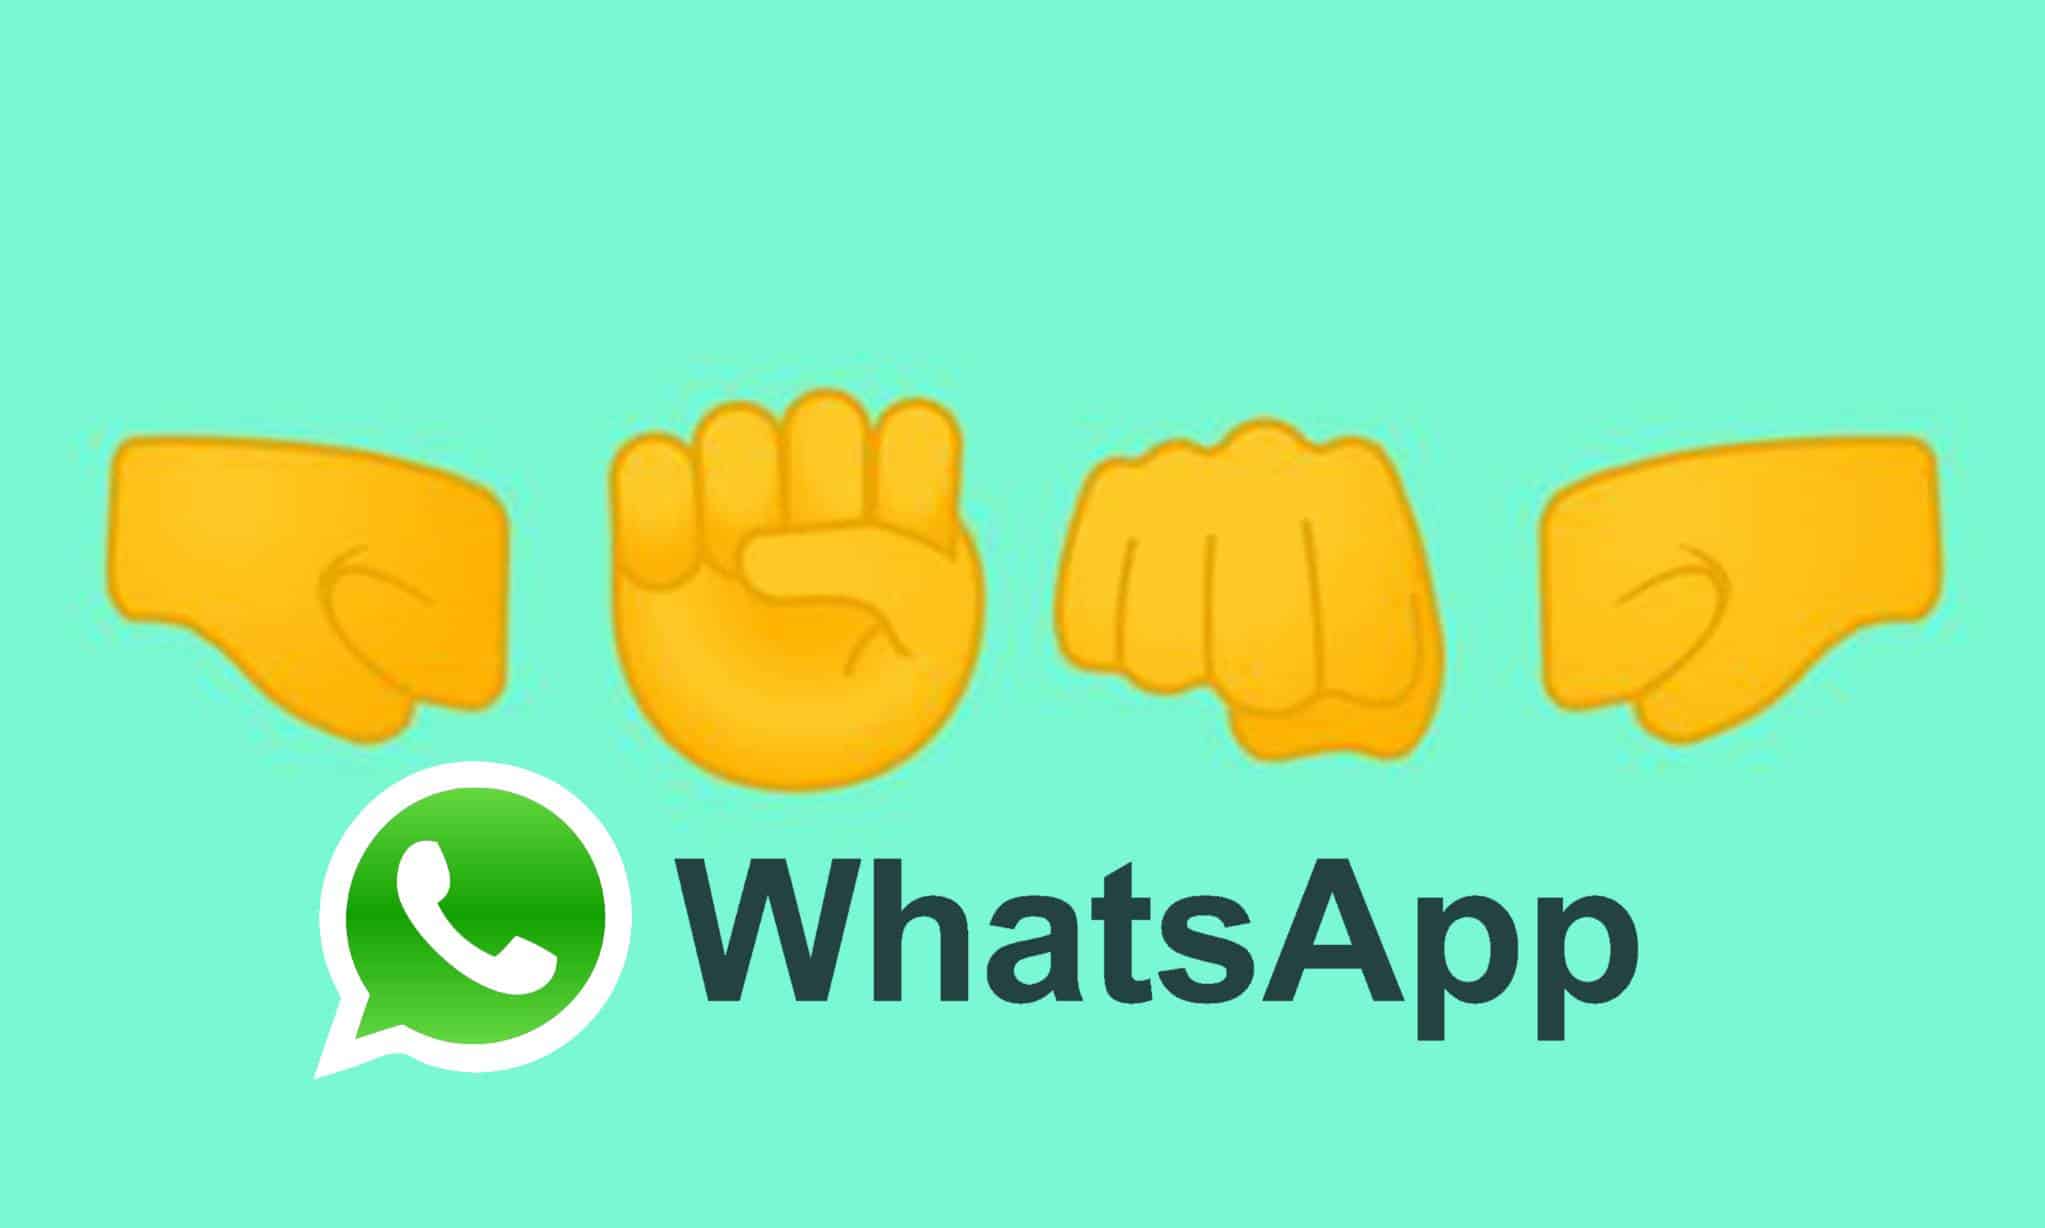 Surpreenda-se!  Este é o verdadeiro significado dos emojis 4 punhos no WhatsApp